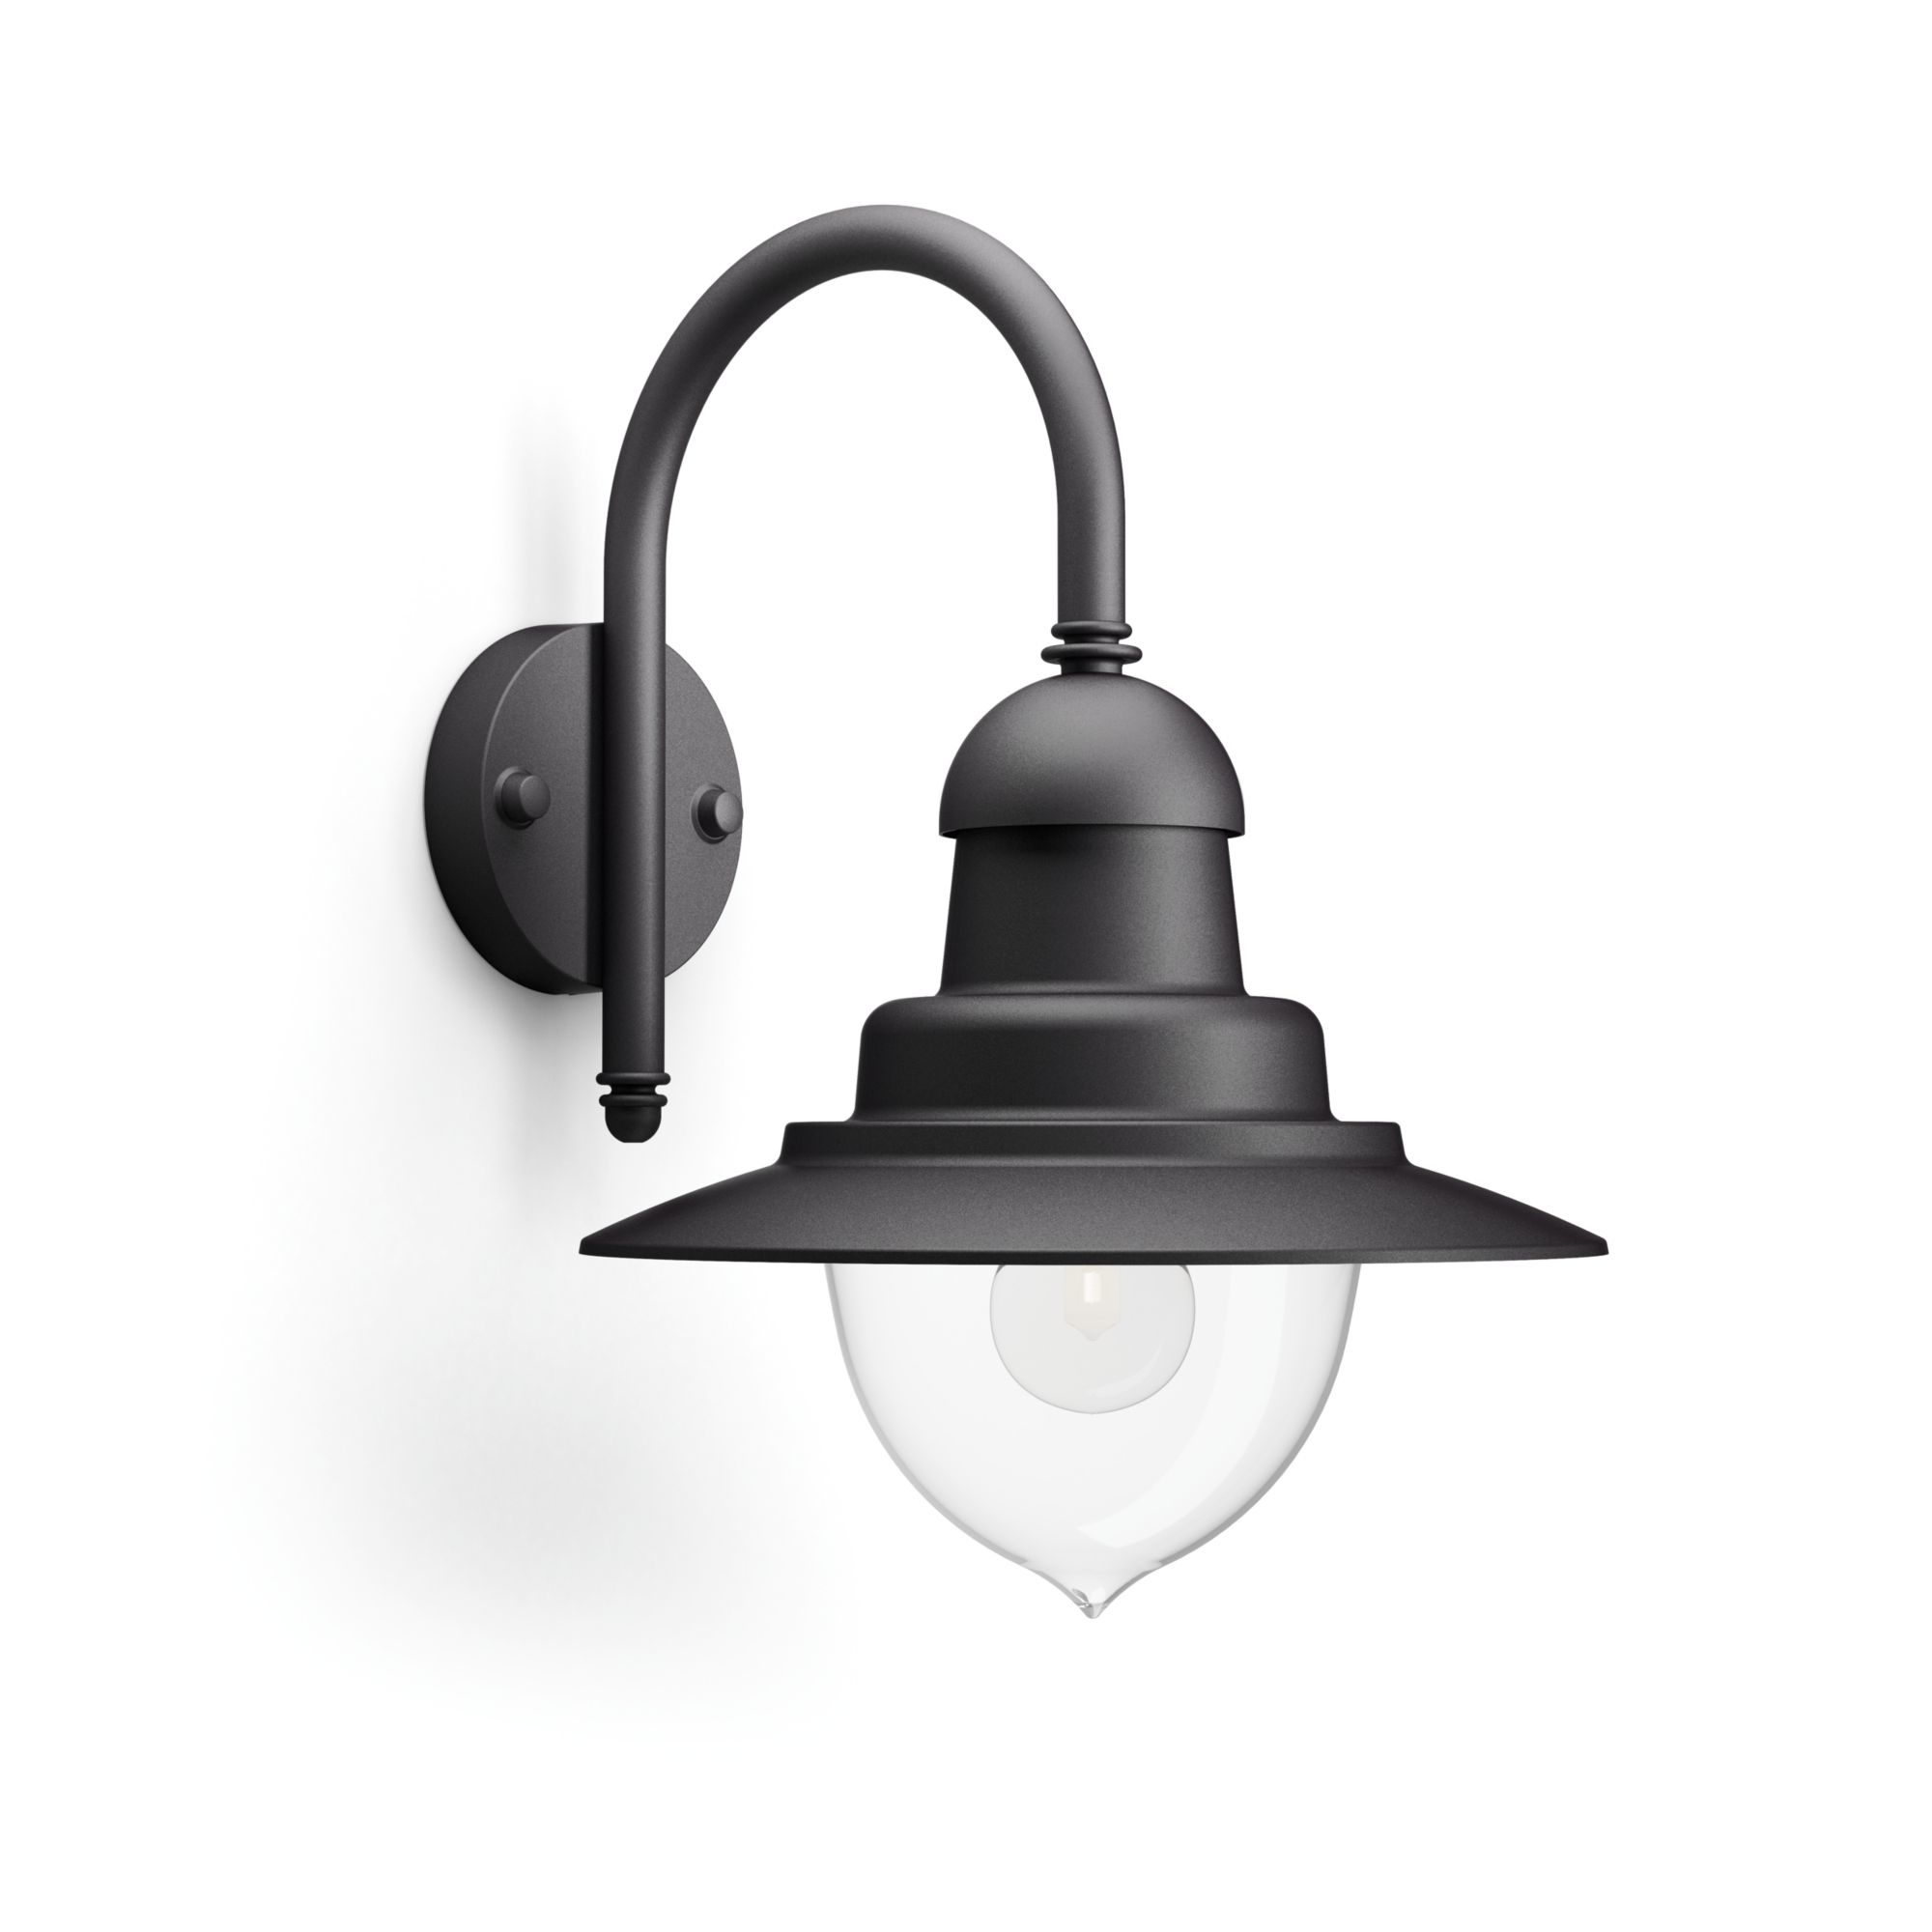 Philips by Signify Raindrop wandlamp 60W E27 zonder lamp